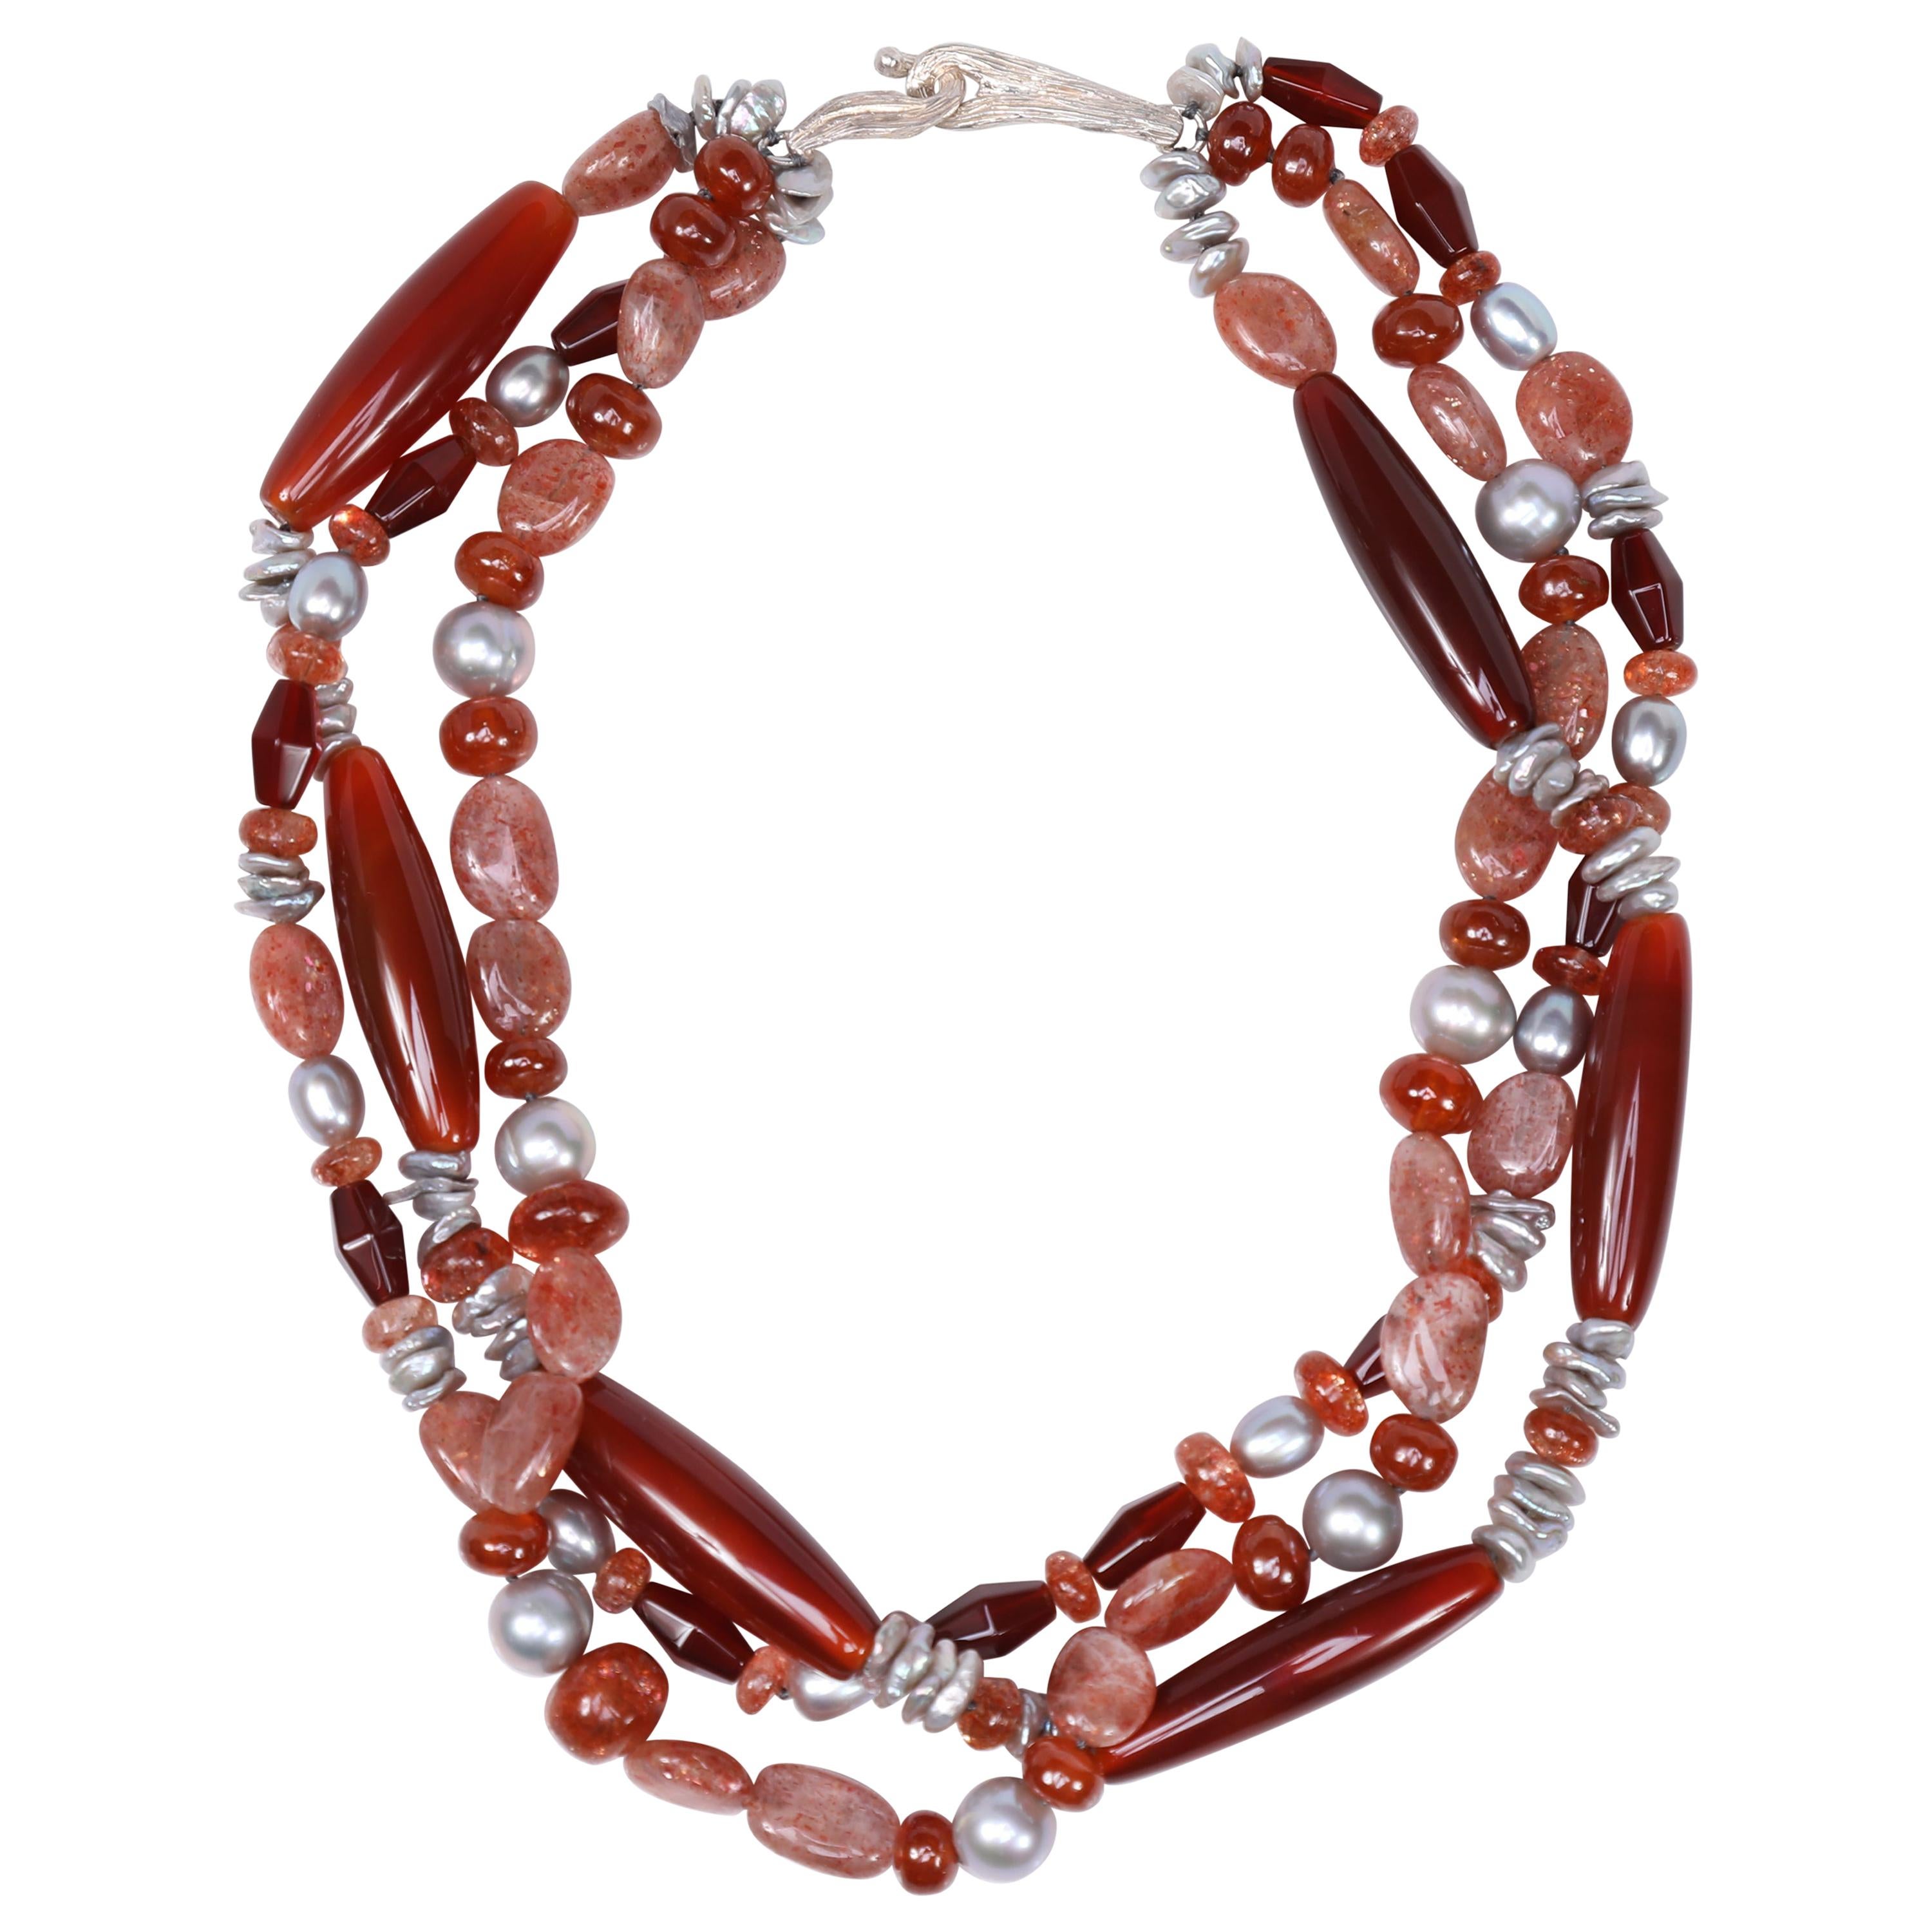 Multi strand Carnelian Beads Necklace with Sterling Silver Beads 16 Handmade Orange Carnelian Jewelry 